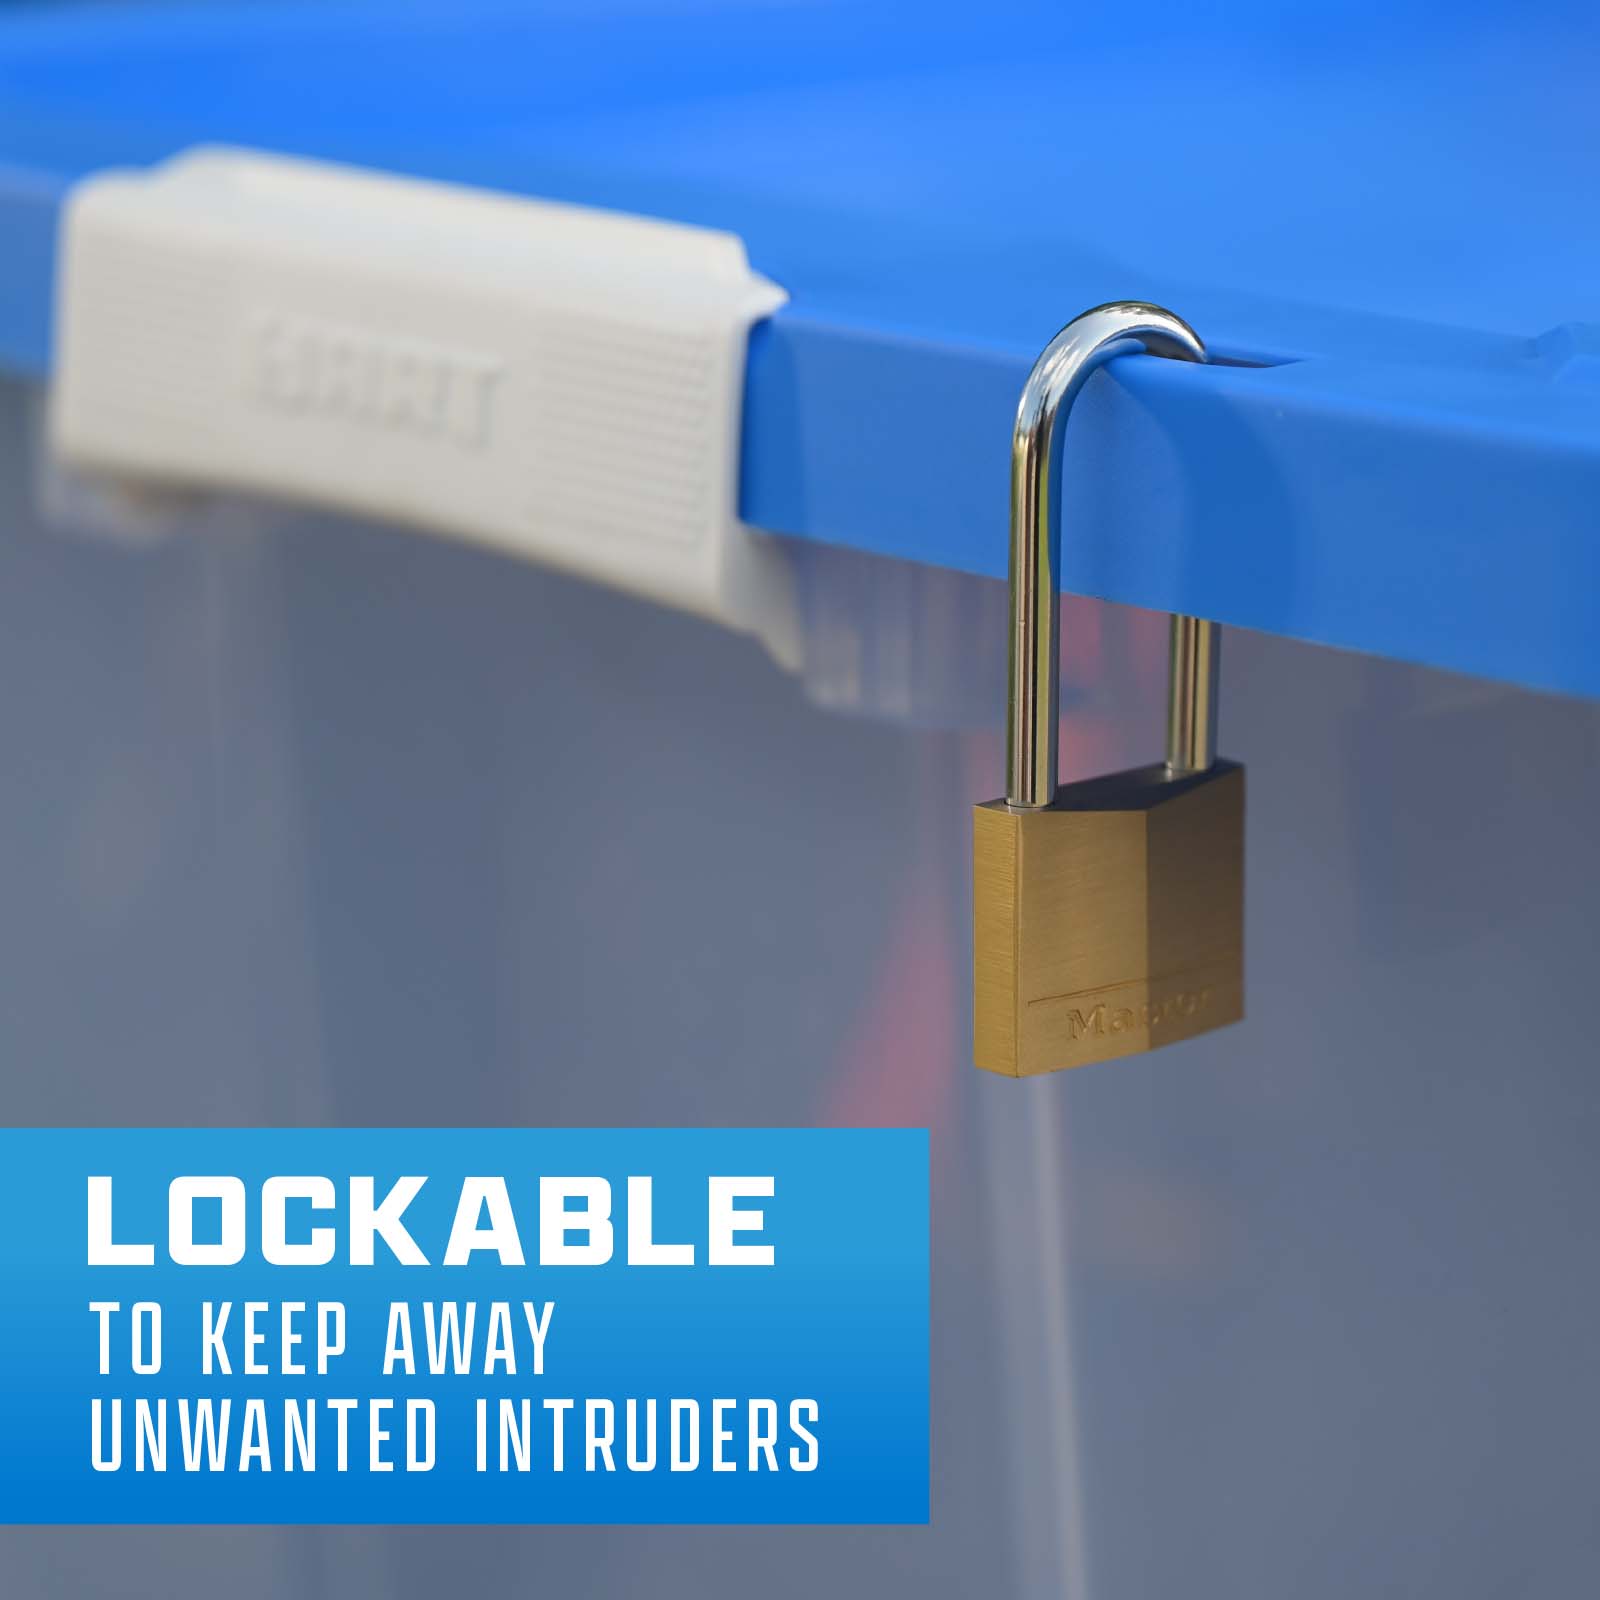 Lockable to keep away unwanted intruders